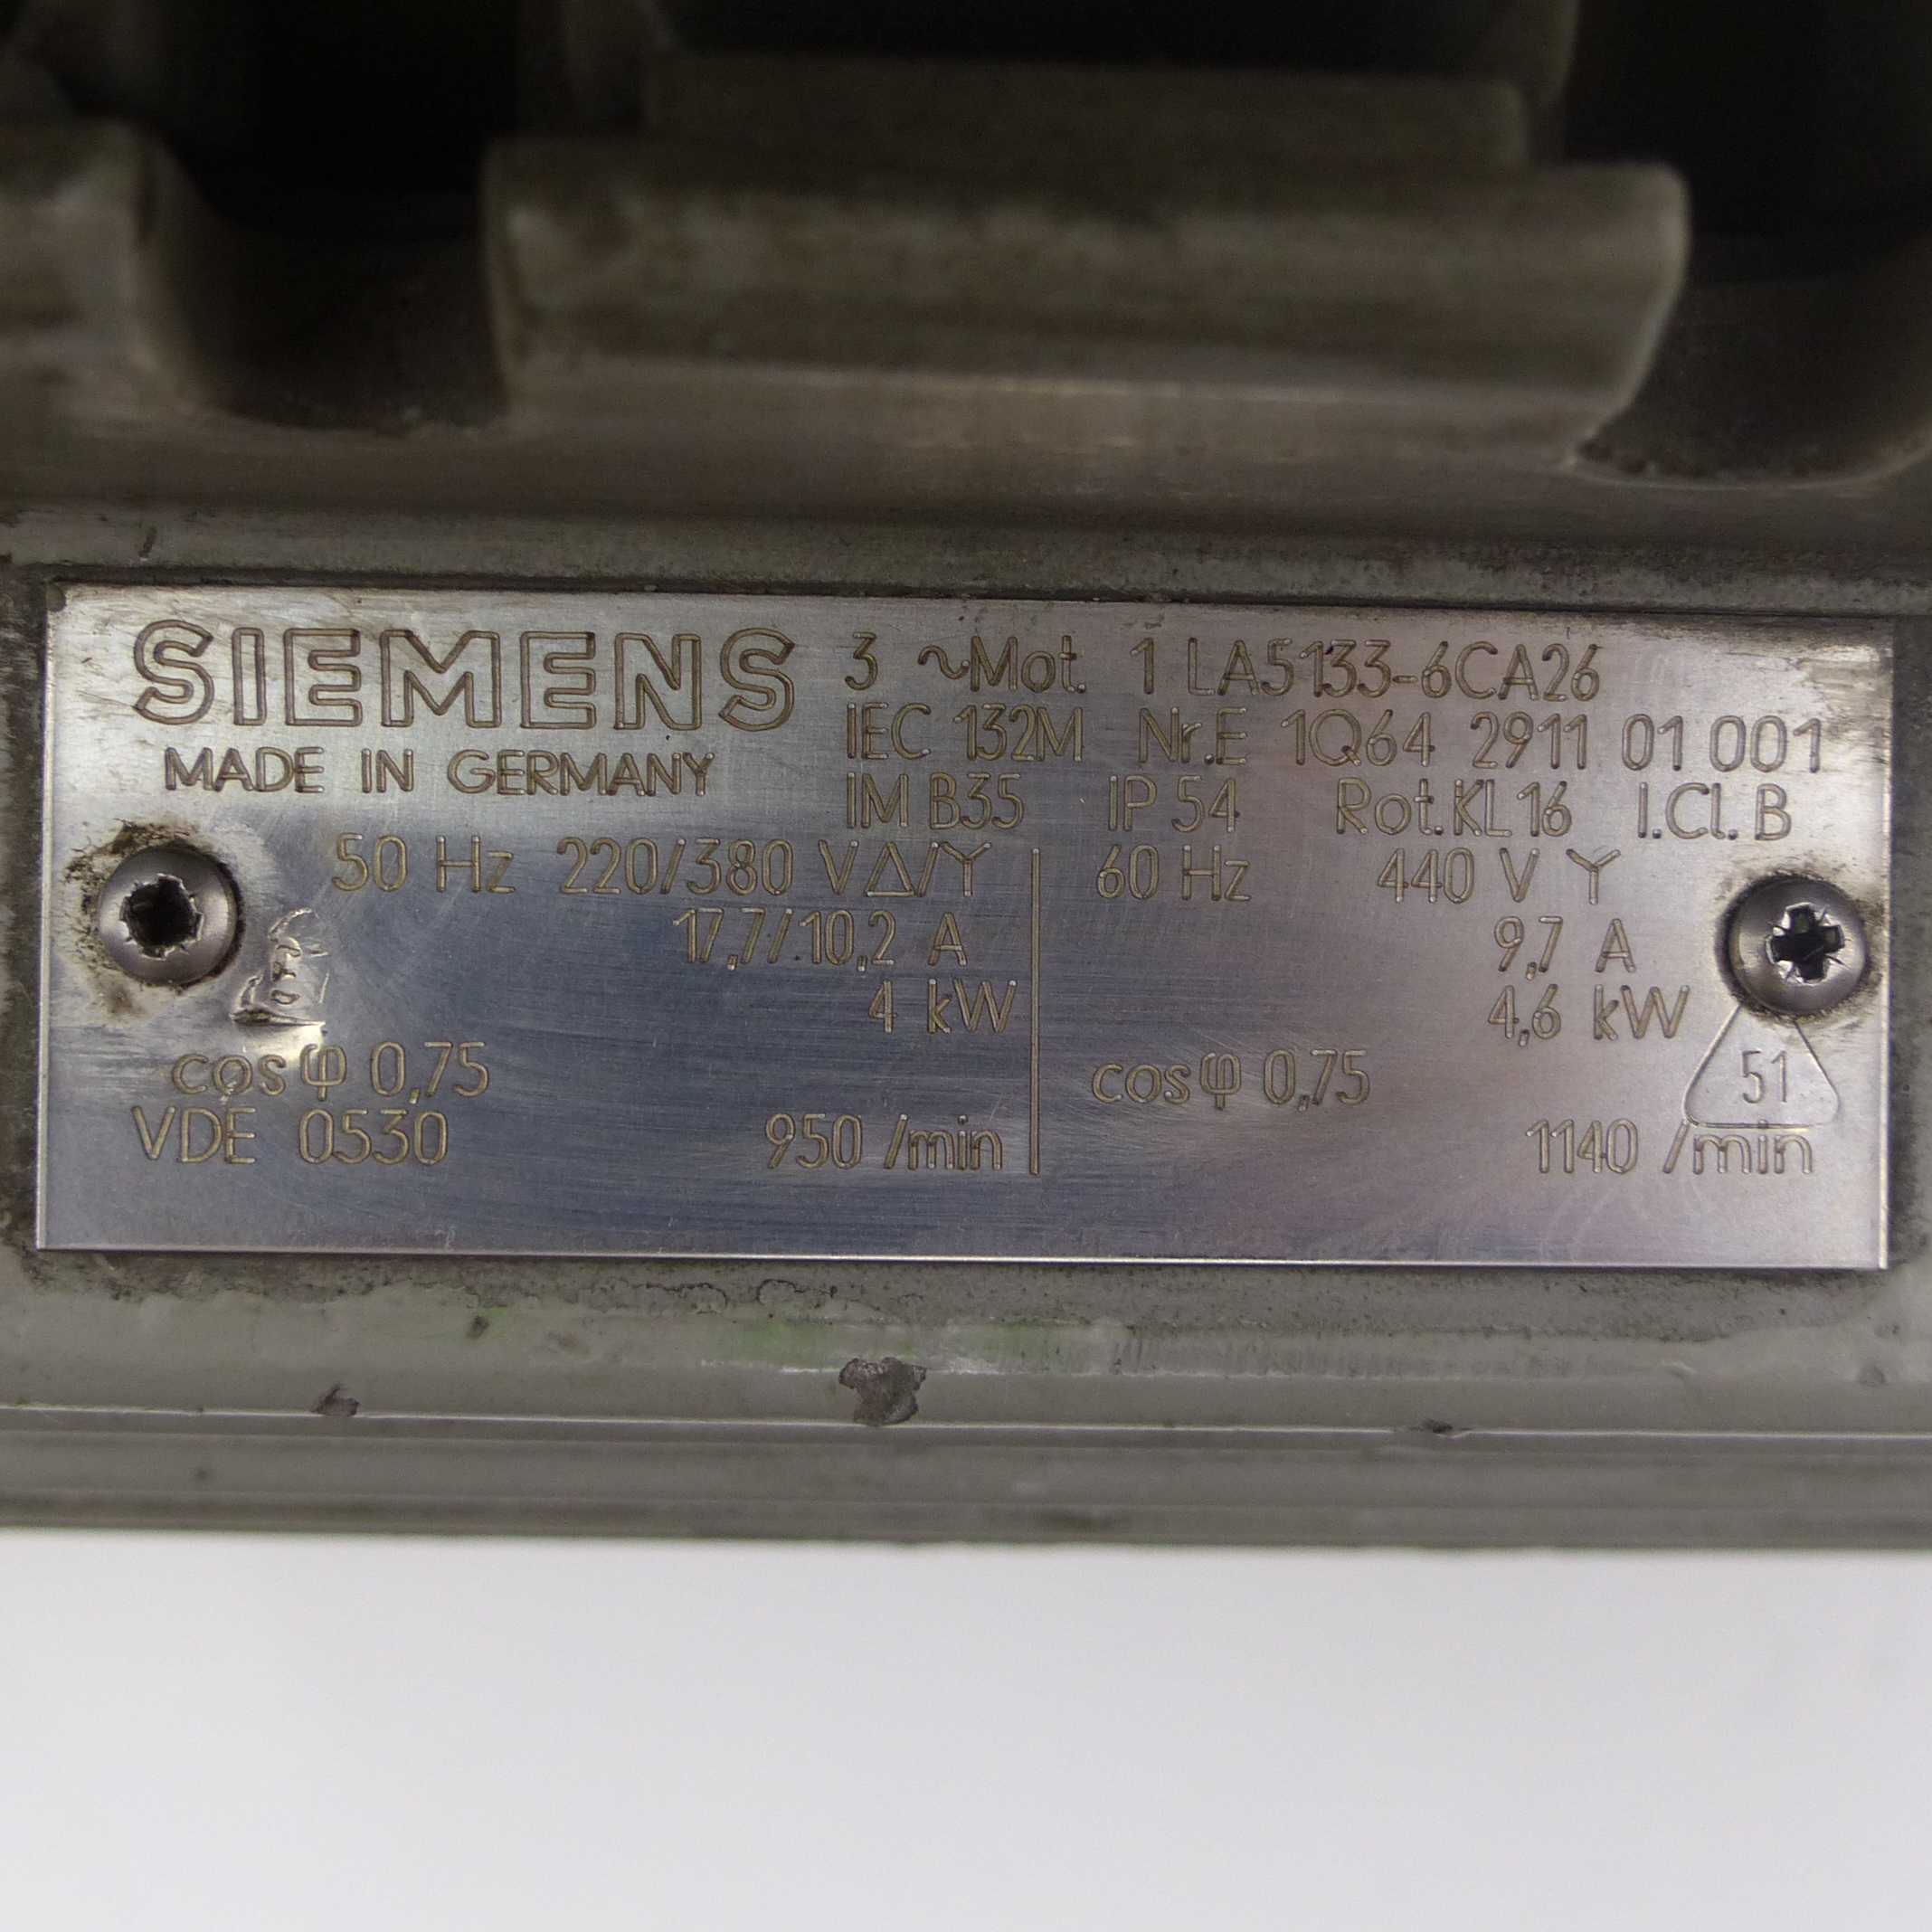 Drehstrommotor 1 LA5133-6CA26 